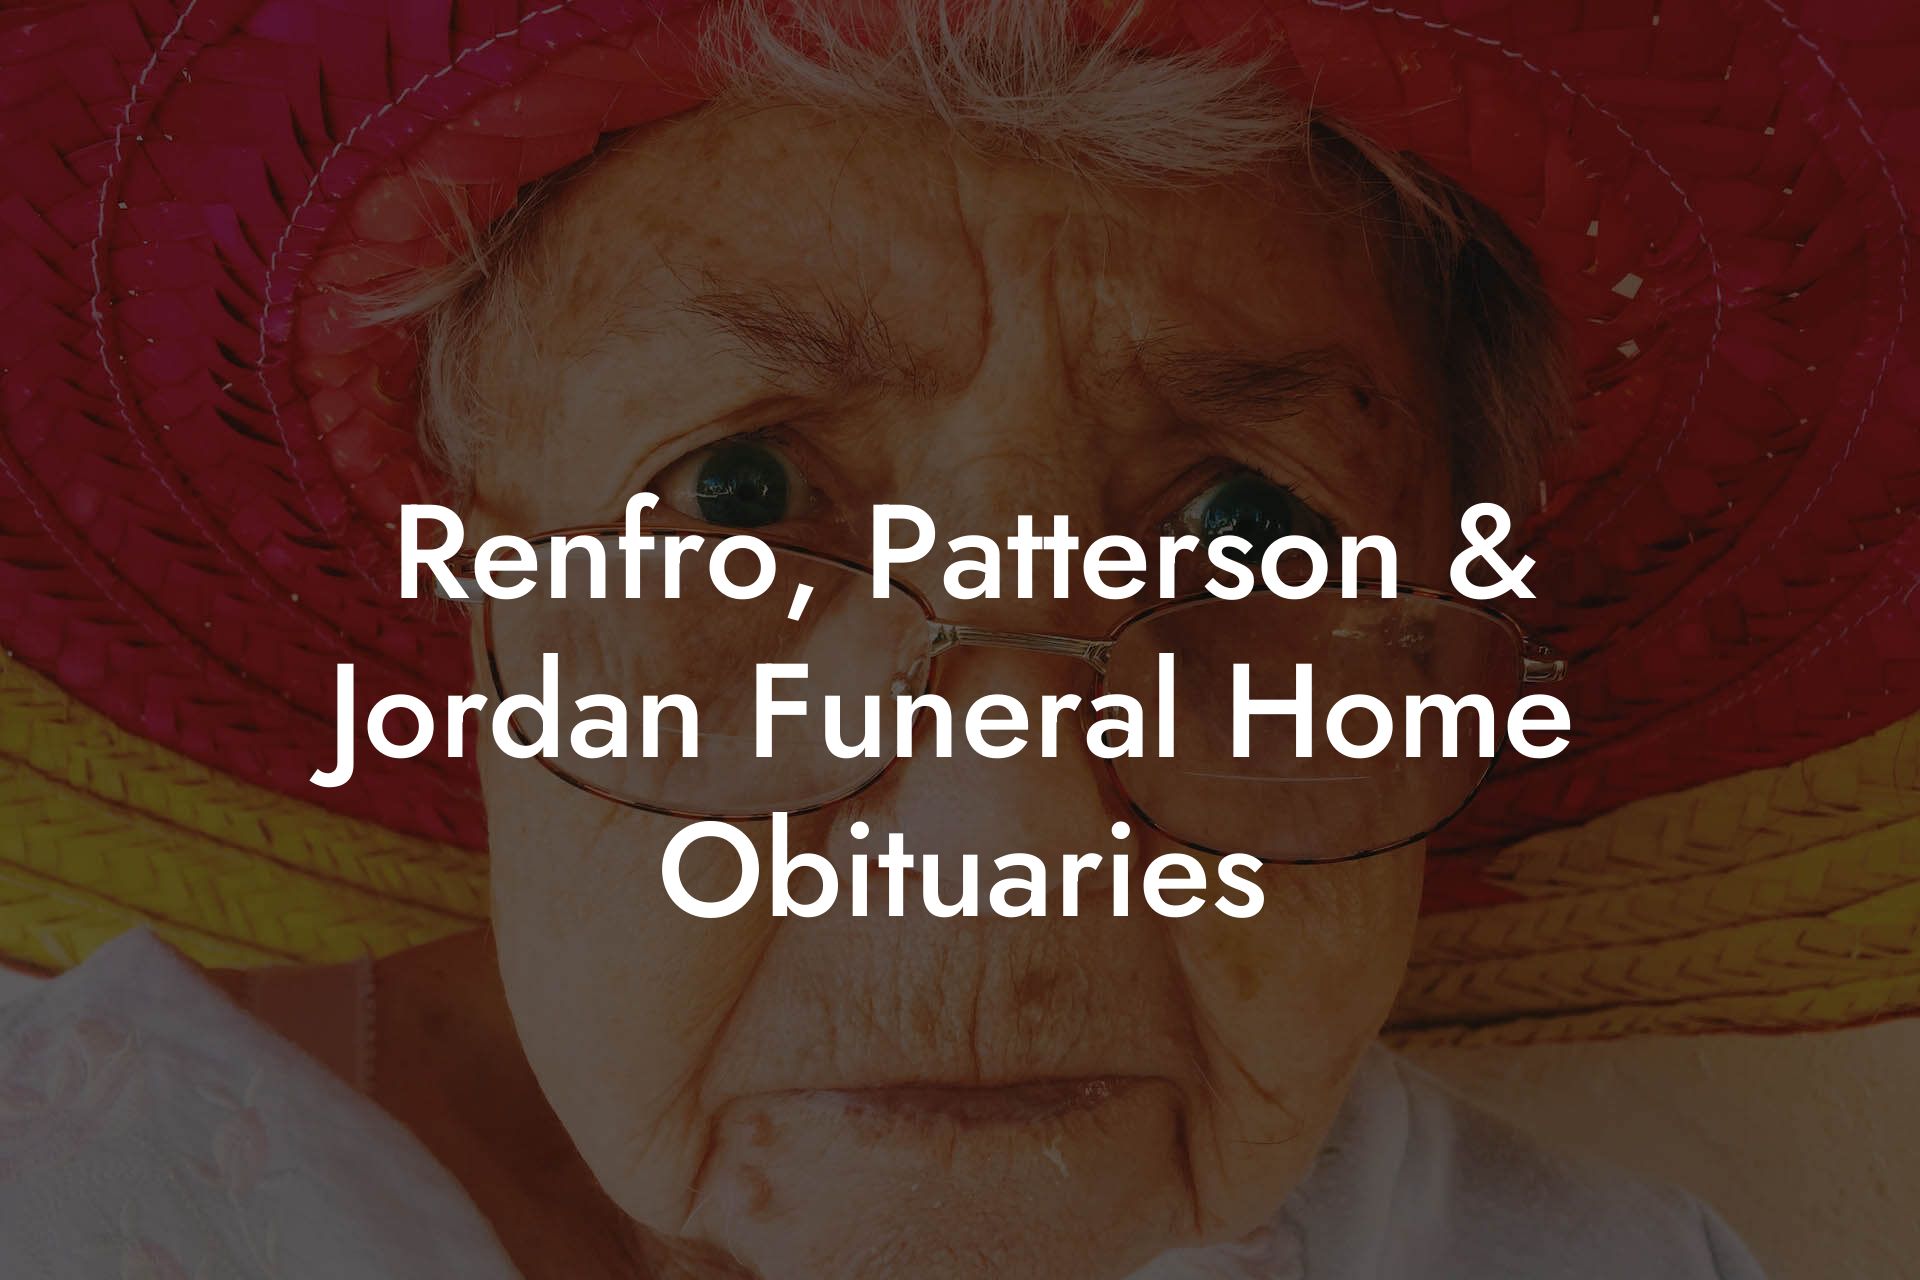 Renfro, Patterson & Jordan Funeral Home Obituaries